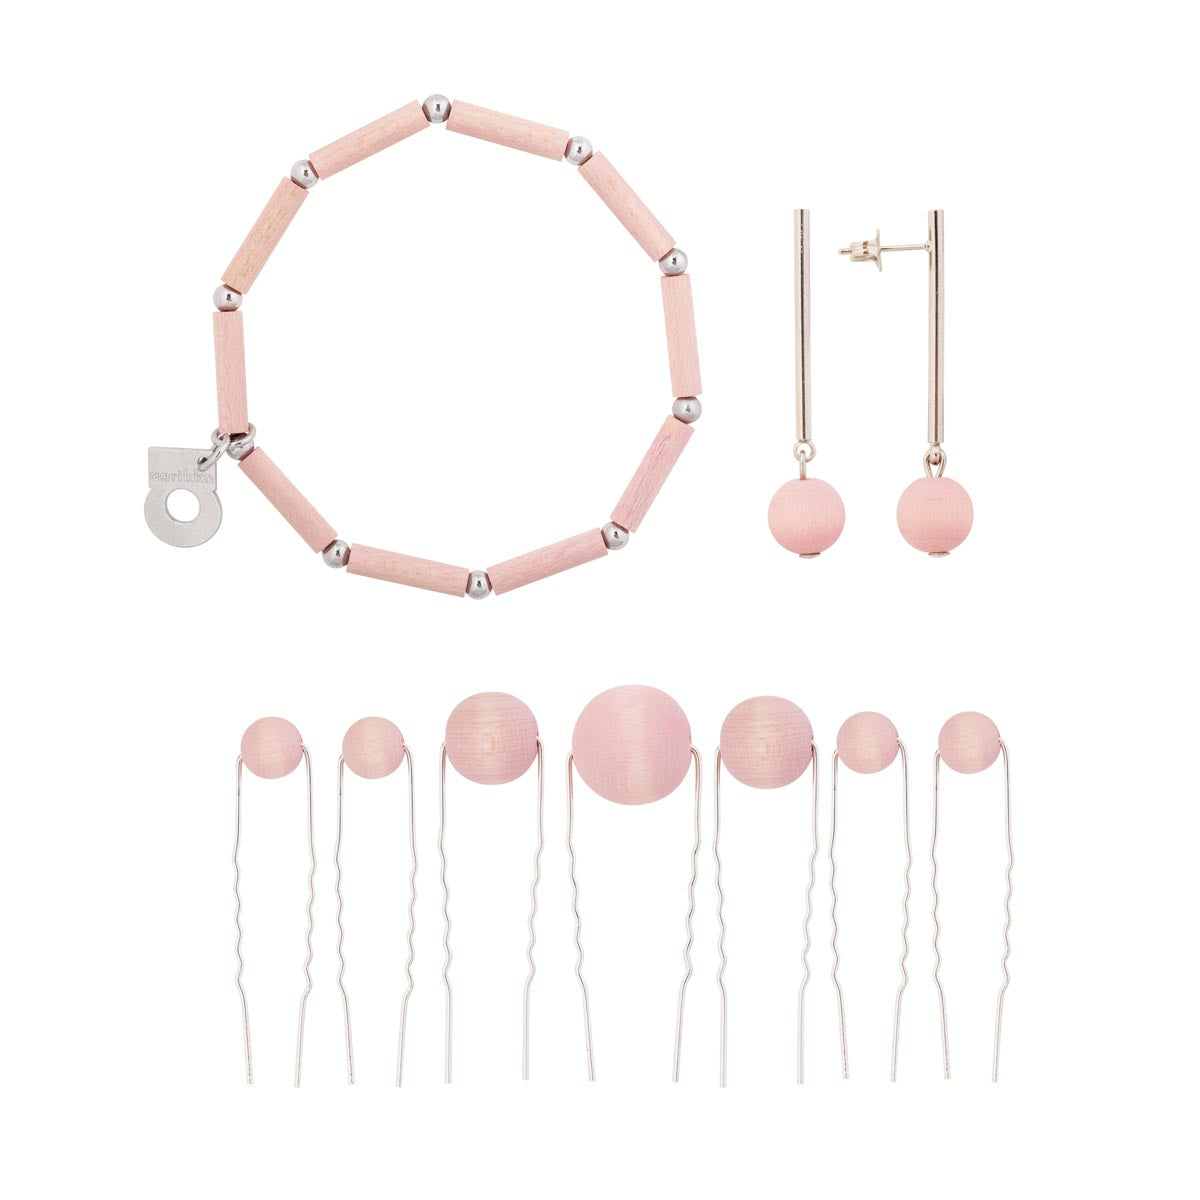 Sydänkäpyseni jewellery set, pink and silver